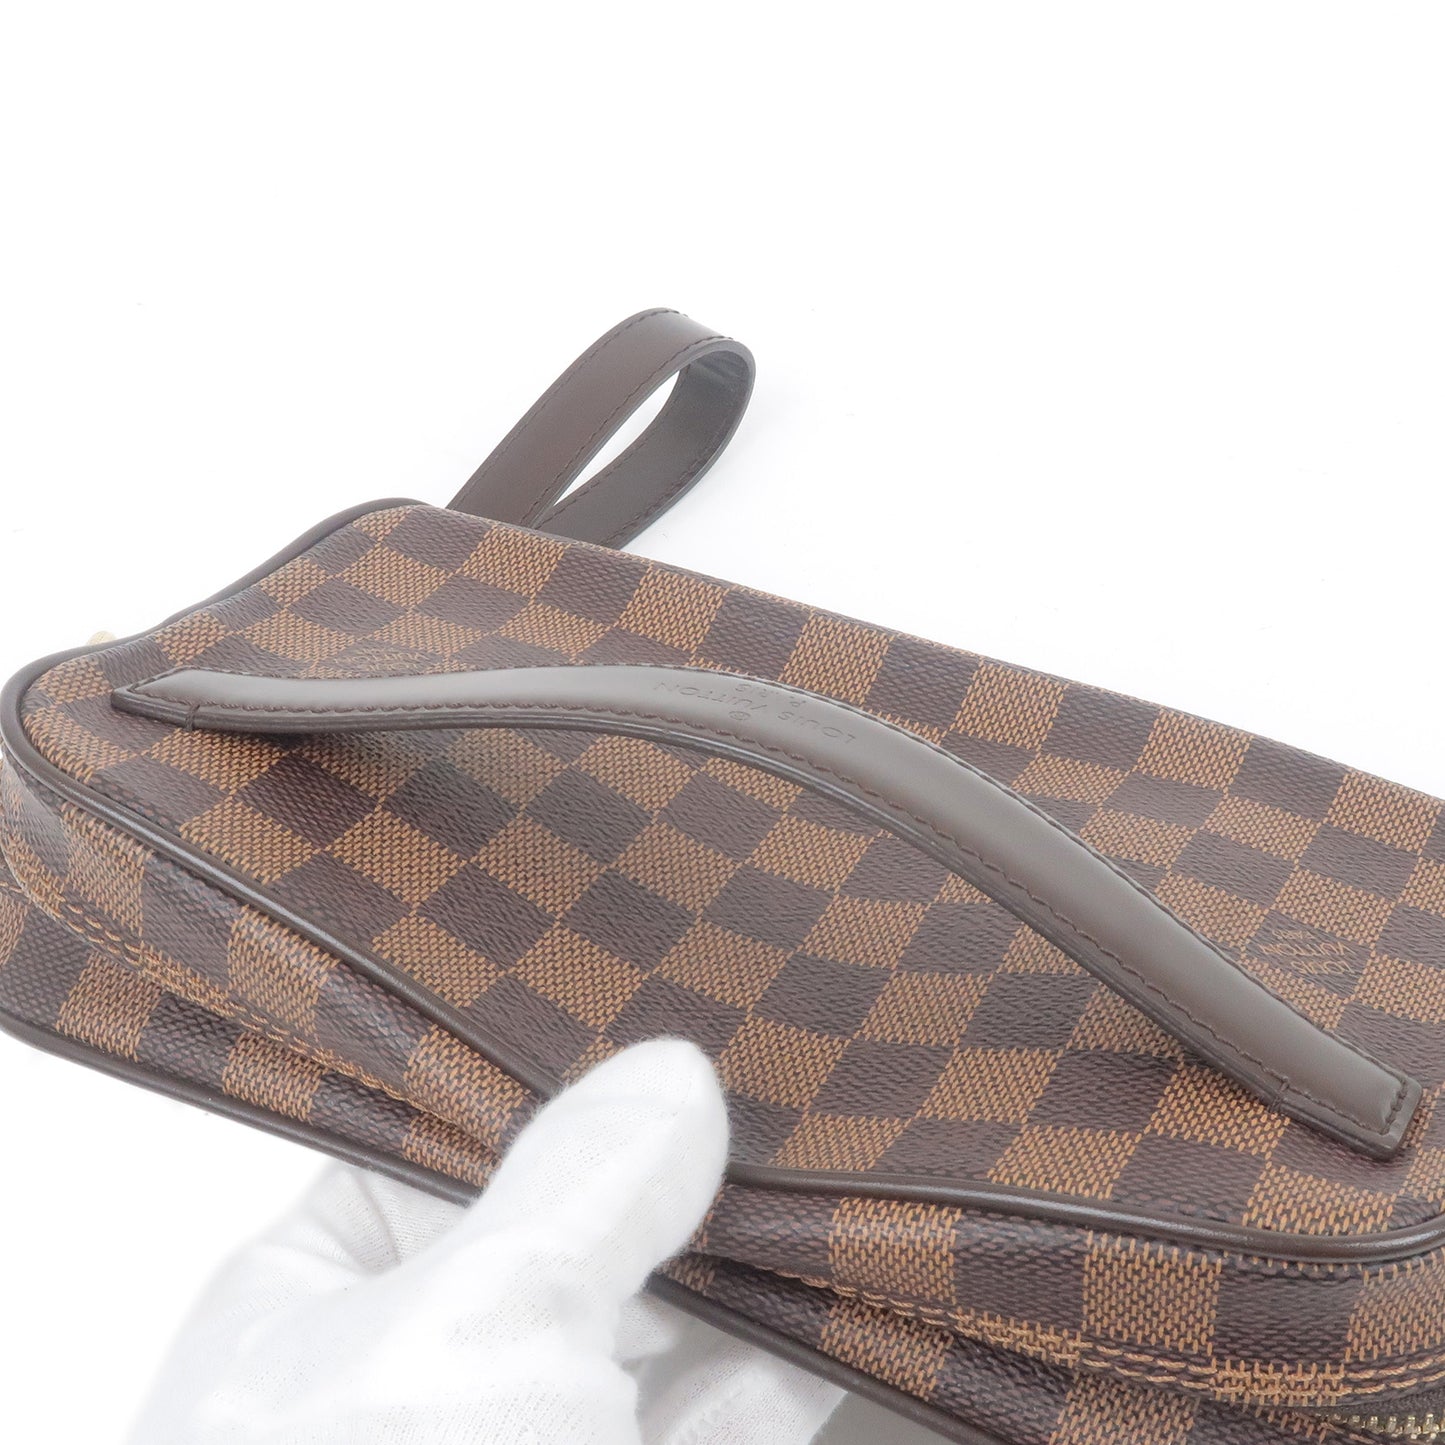 Louis Vuitton Damier Pochette Saint Paul Clutch Bag N41519